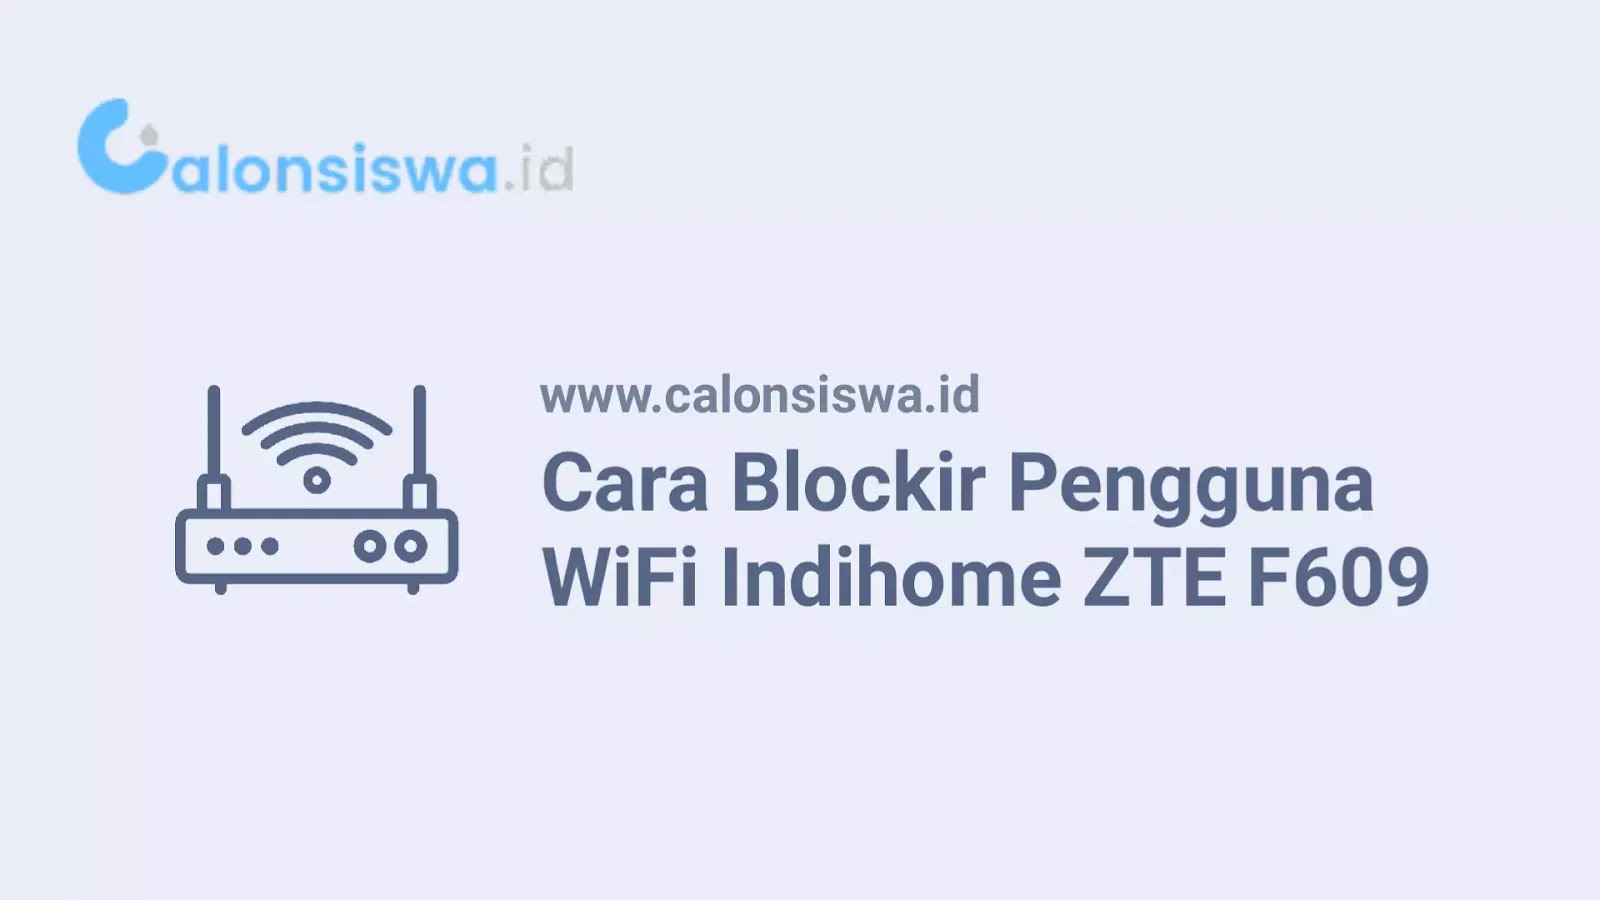 Cara Blokir Pengguna WiFi Indihome ZTE F Cara Blokir Pengguna WiFi Indihome ZTE F609 Terbaru